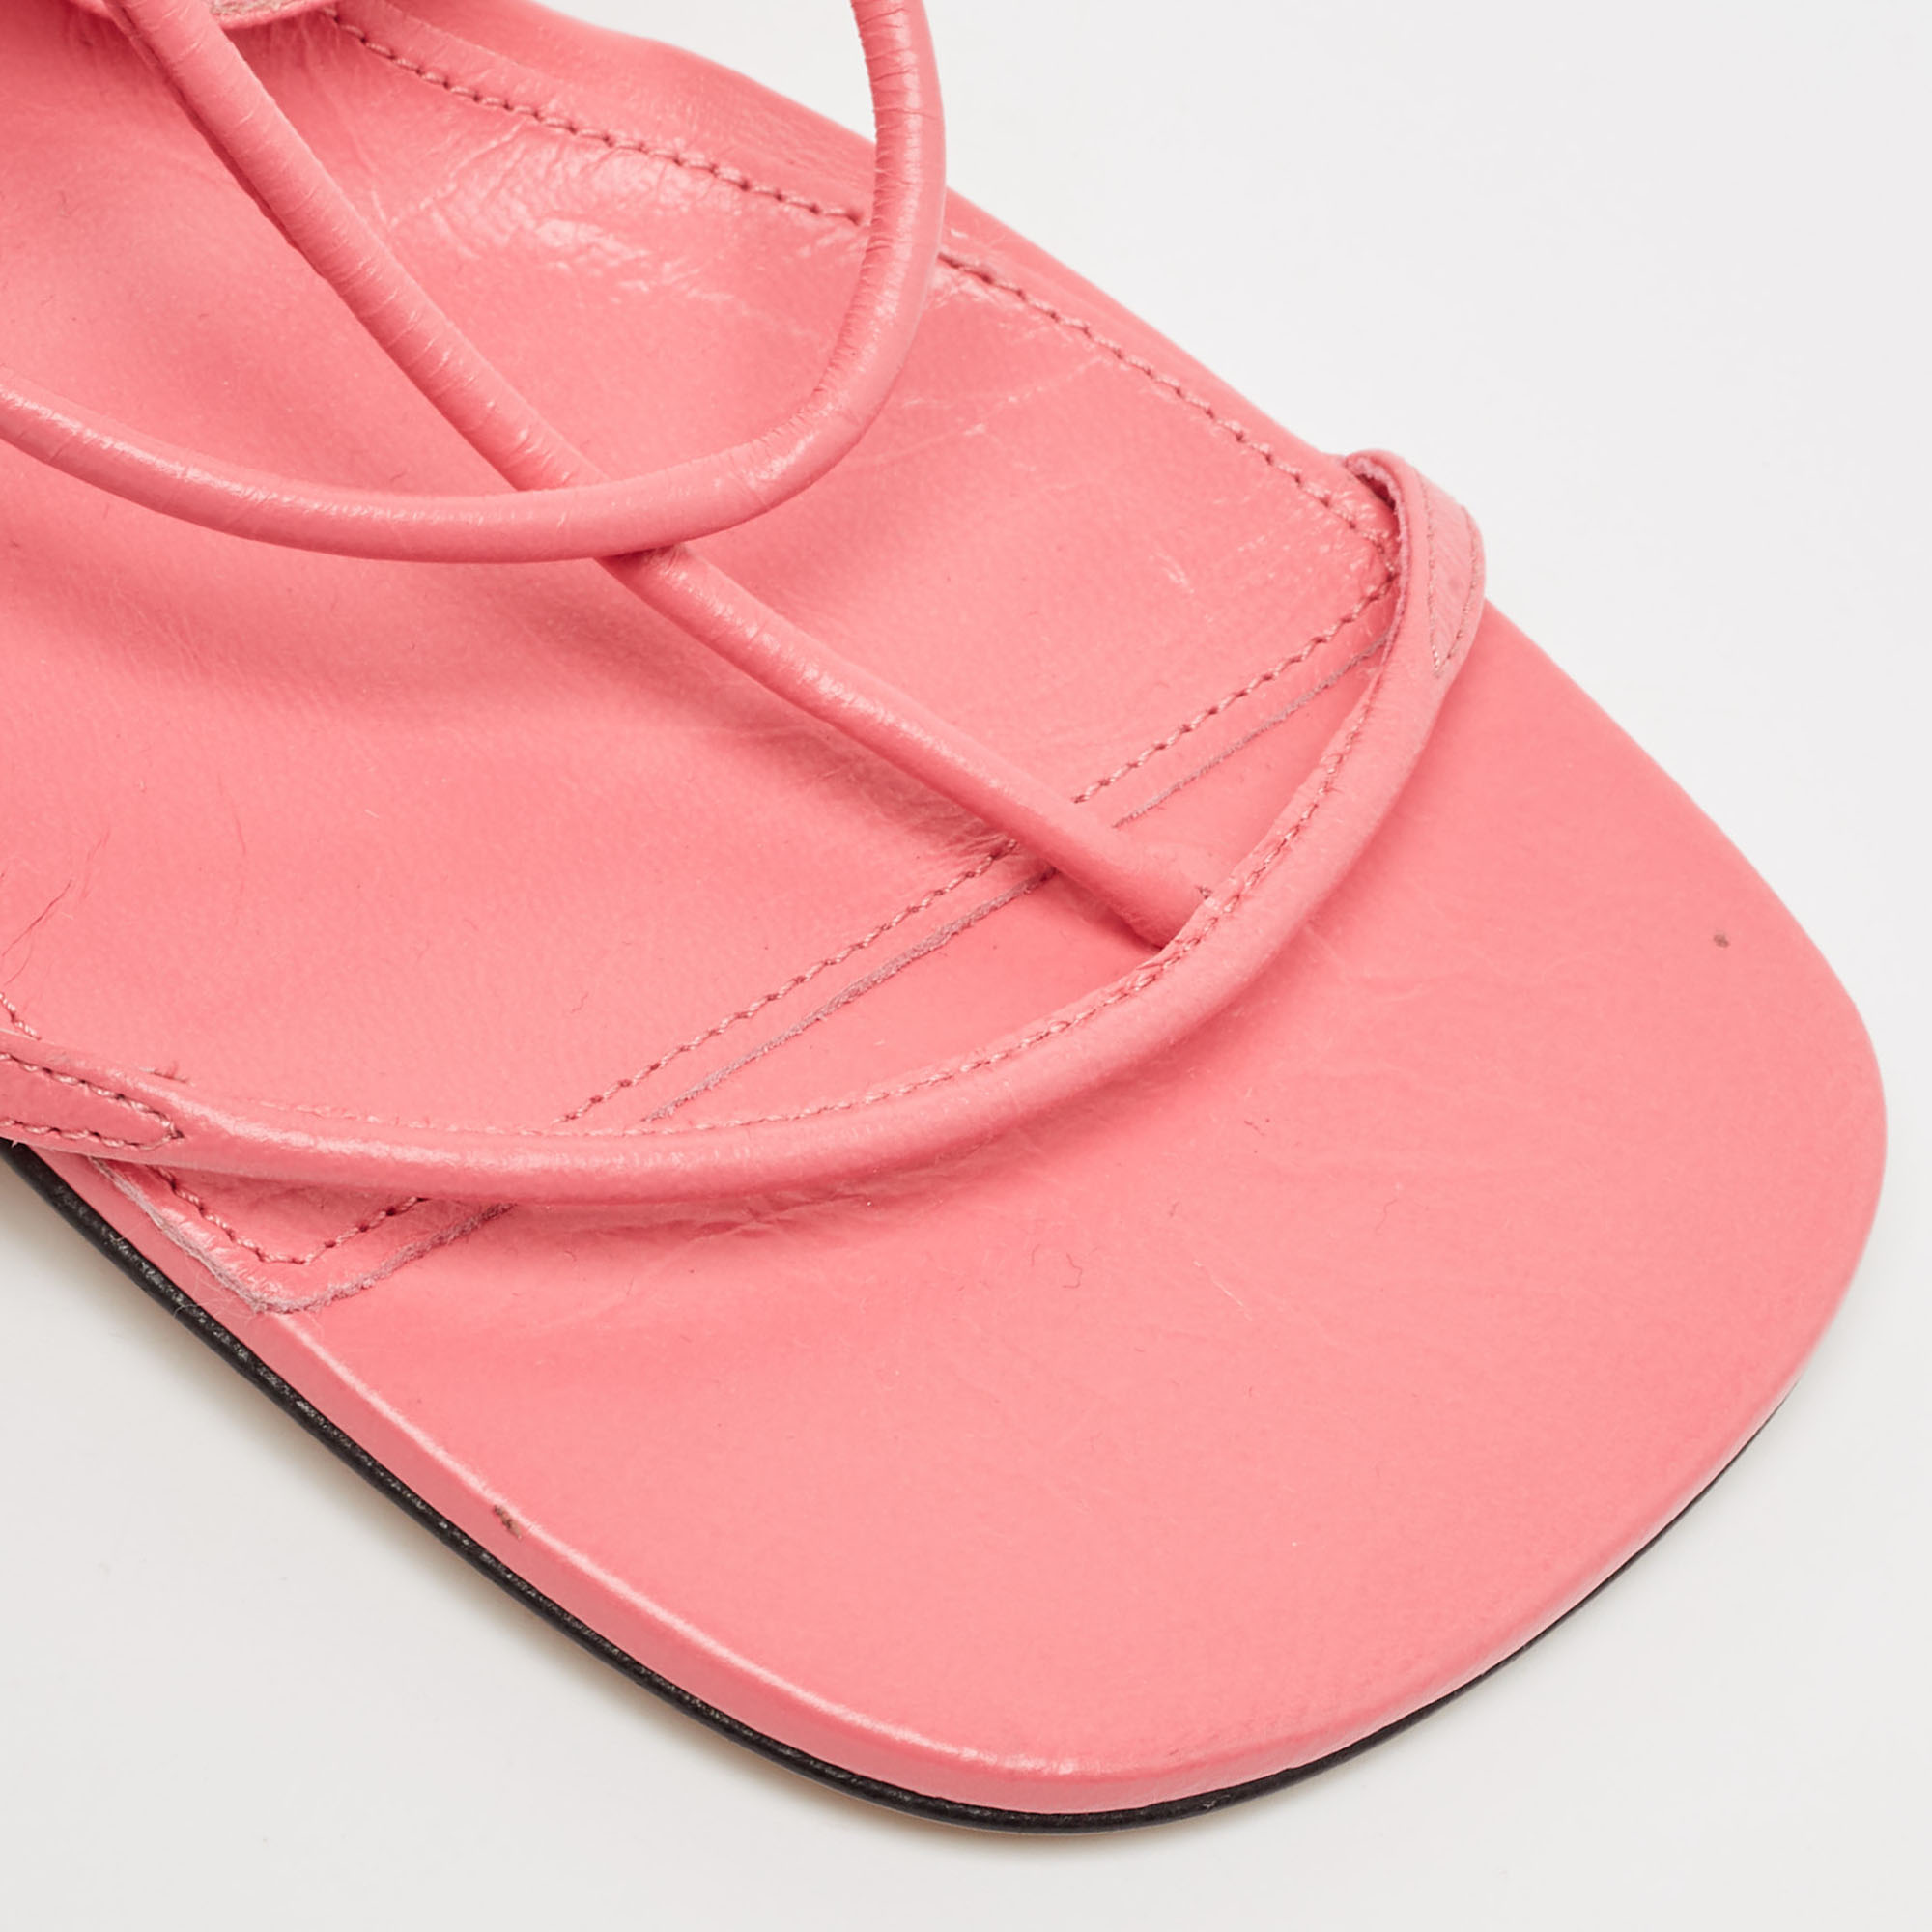 Bottega Veneta Pink Leather Ankle Strap Sandals Size 37